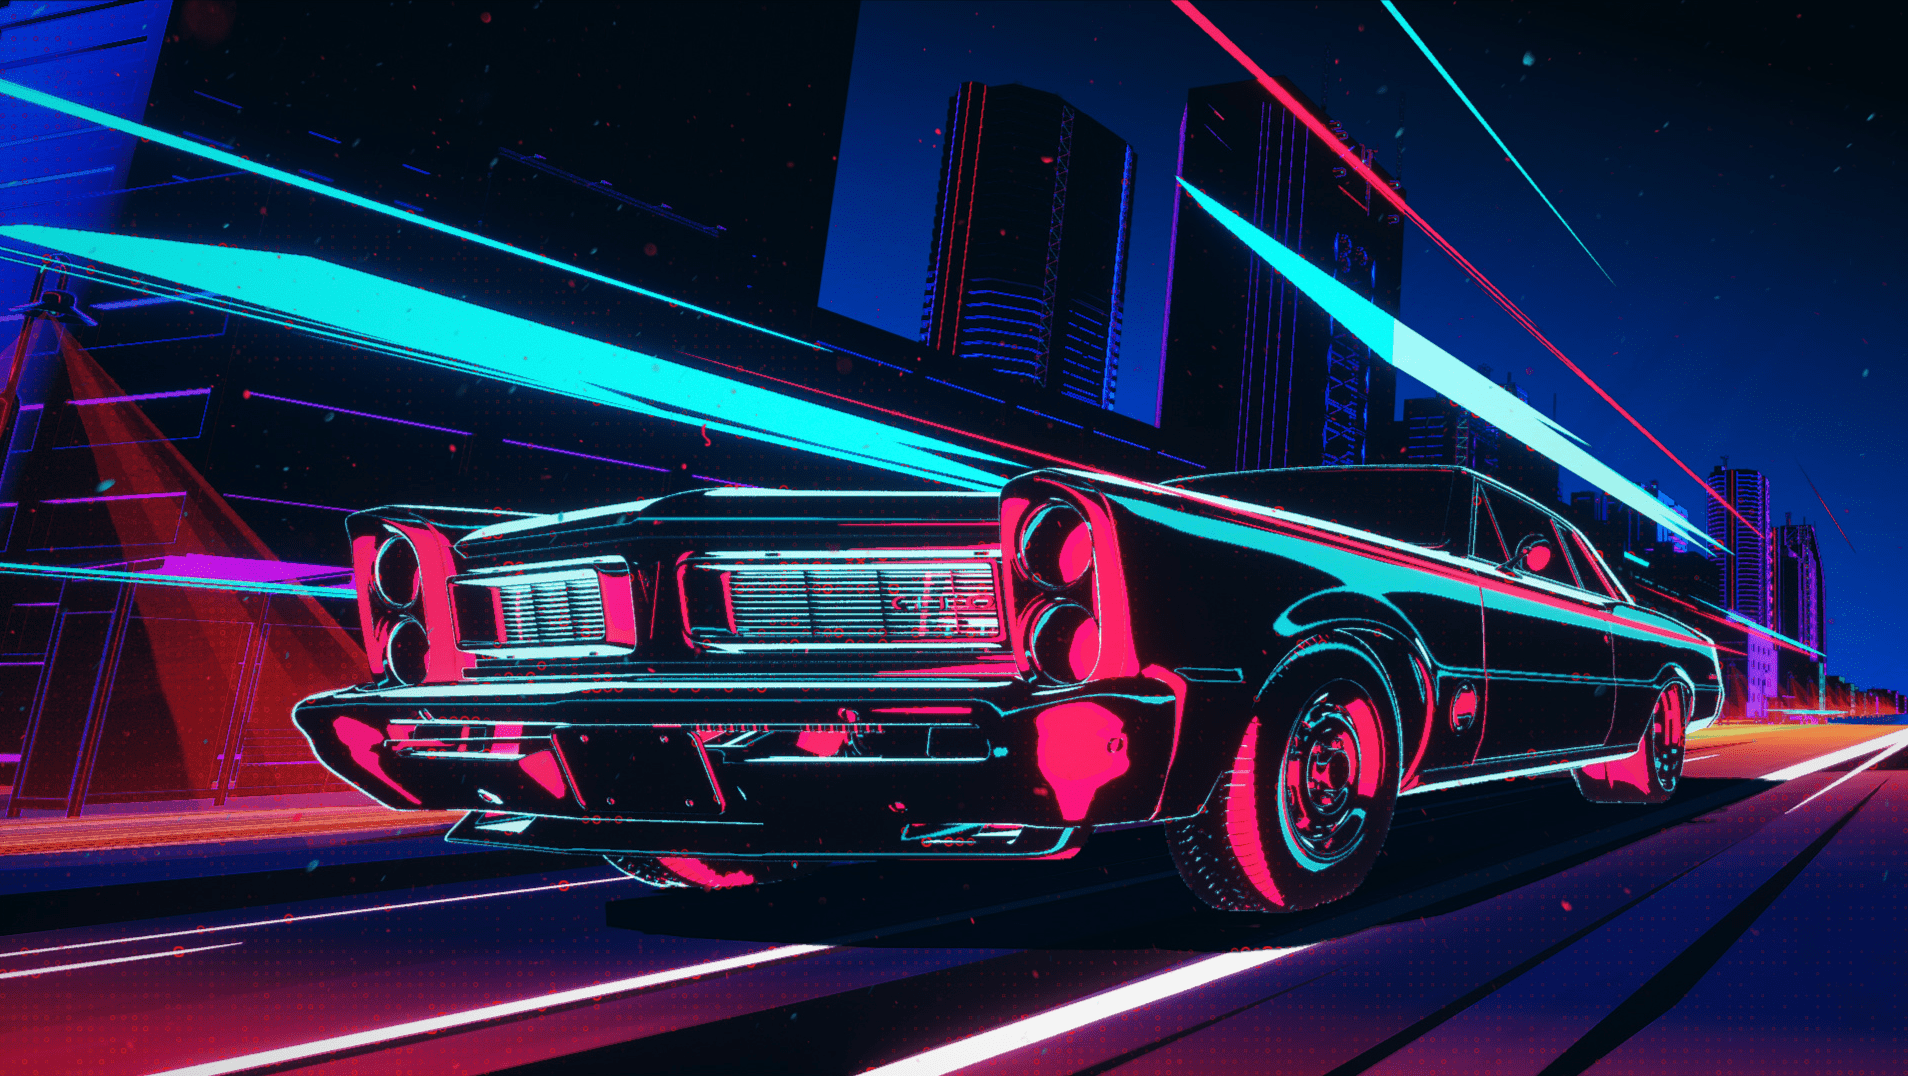 General 1908x1076 Pontiac Pontiac GTO car neon cyberpunk building night perspective street digital art artwork colorful